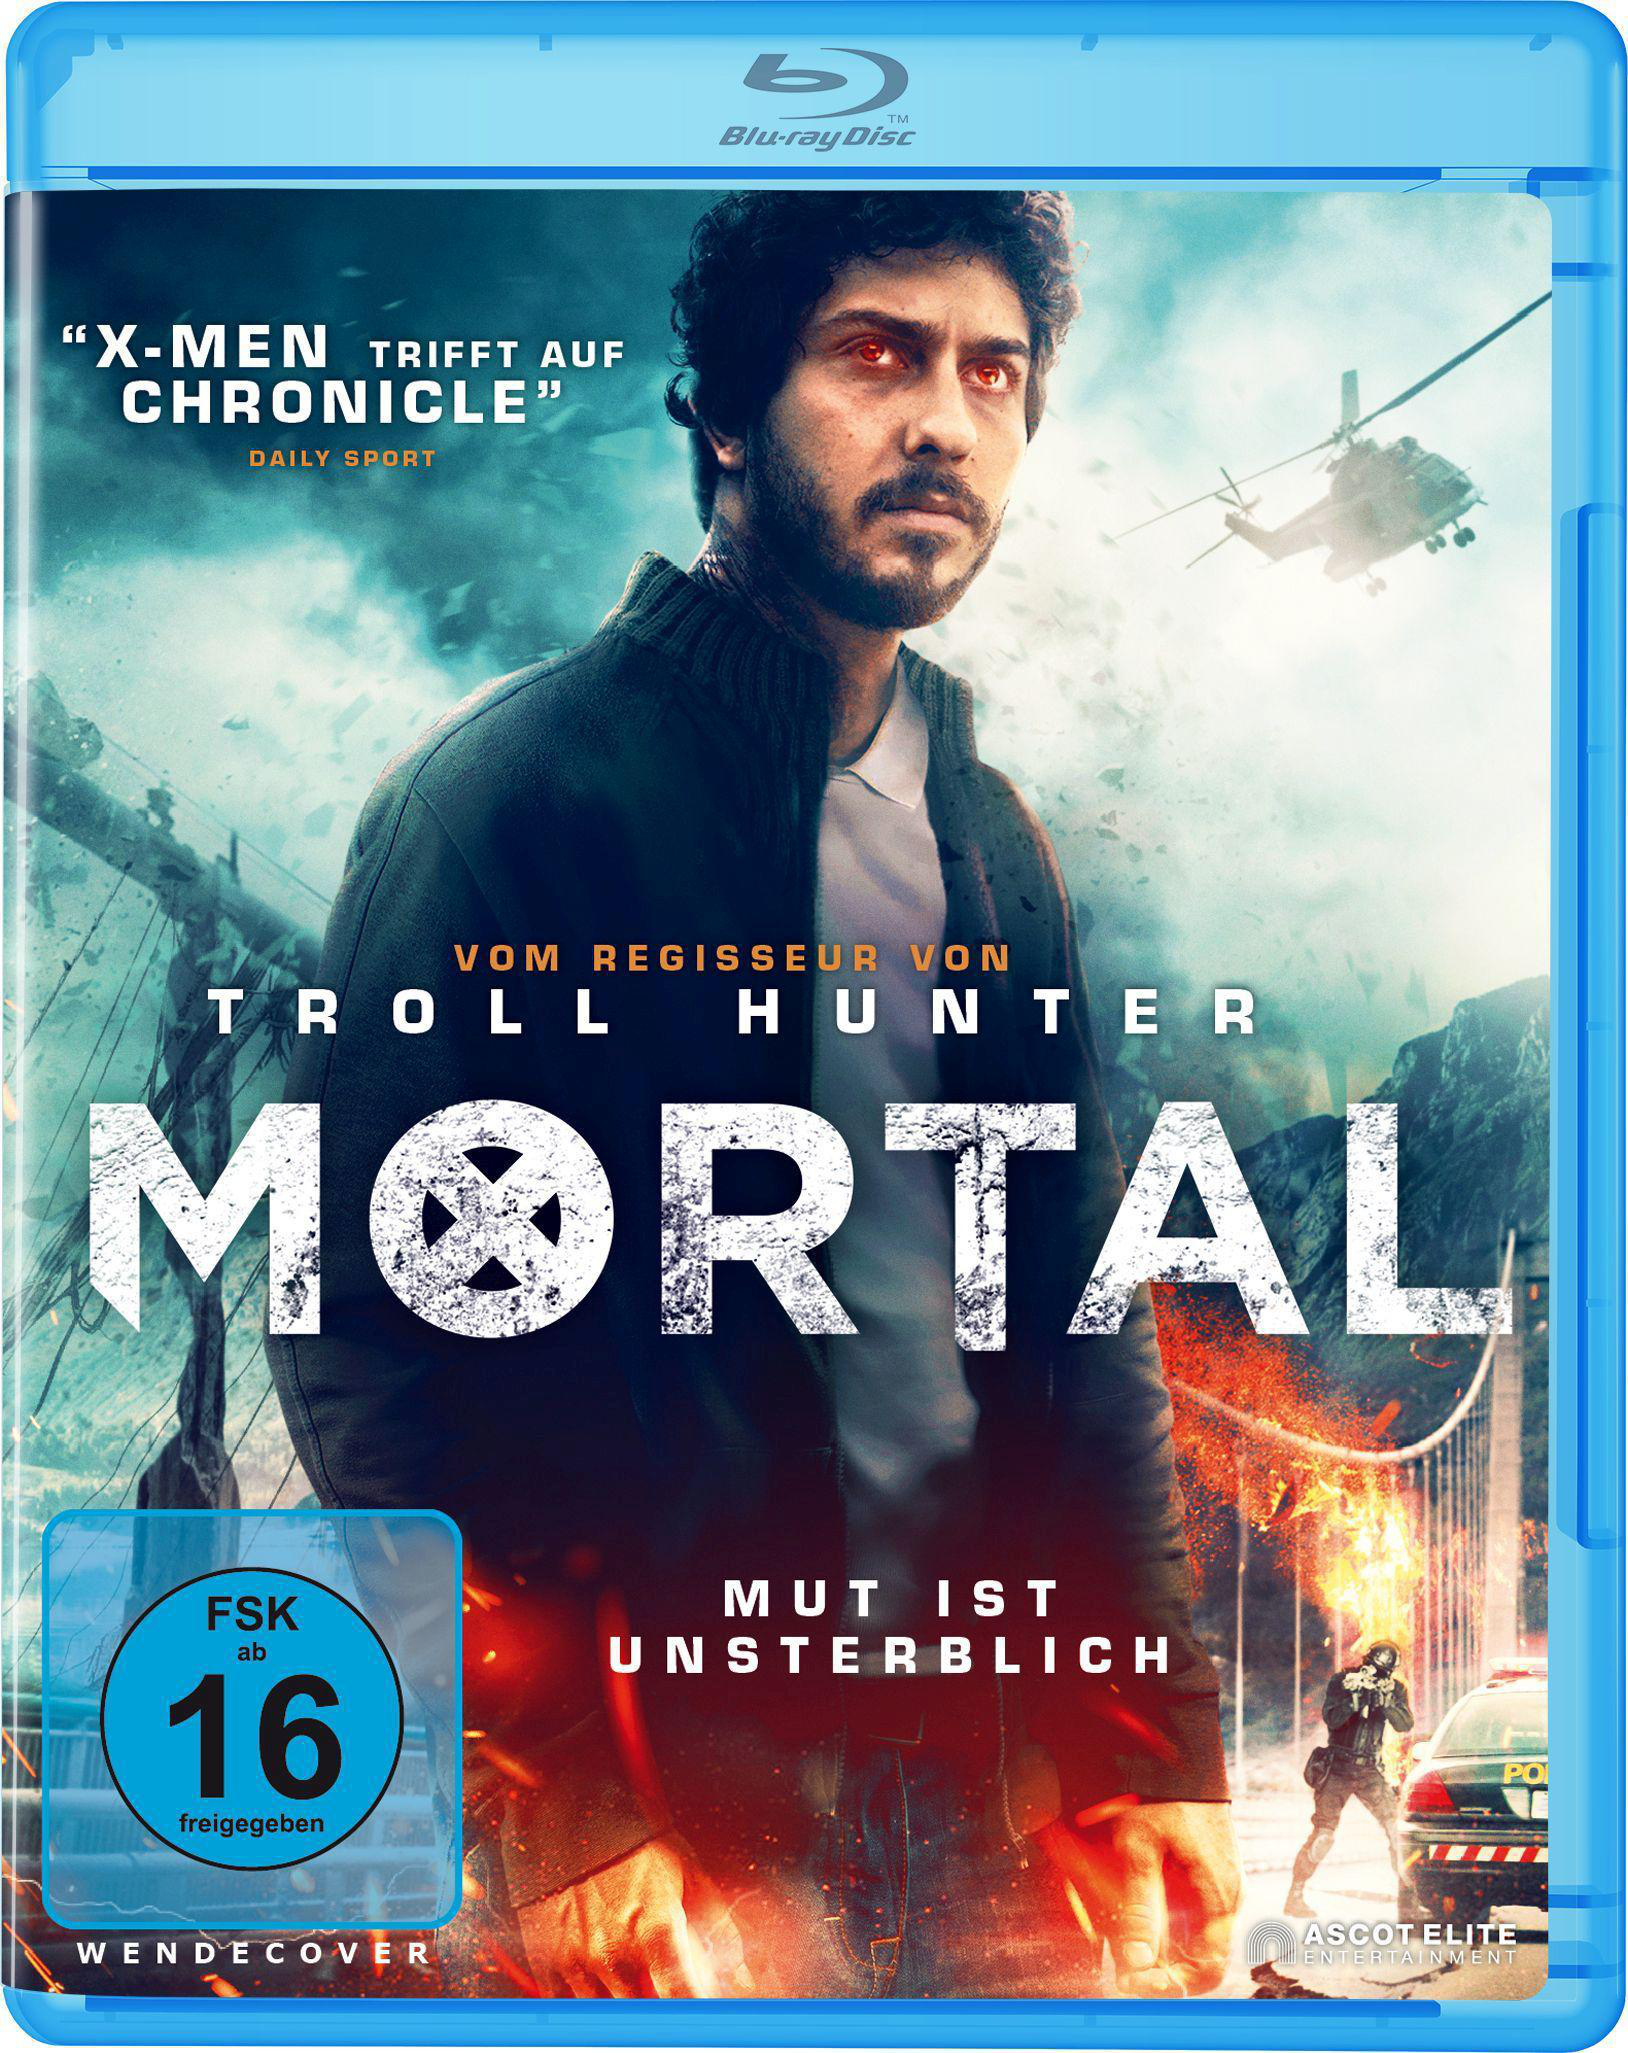 ist - Blu-ray Mut Mortal unsterblich